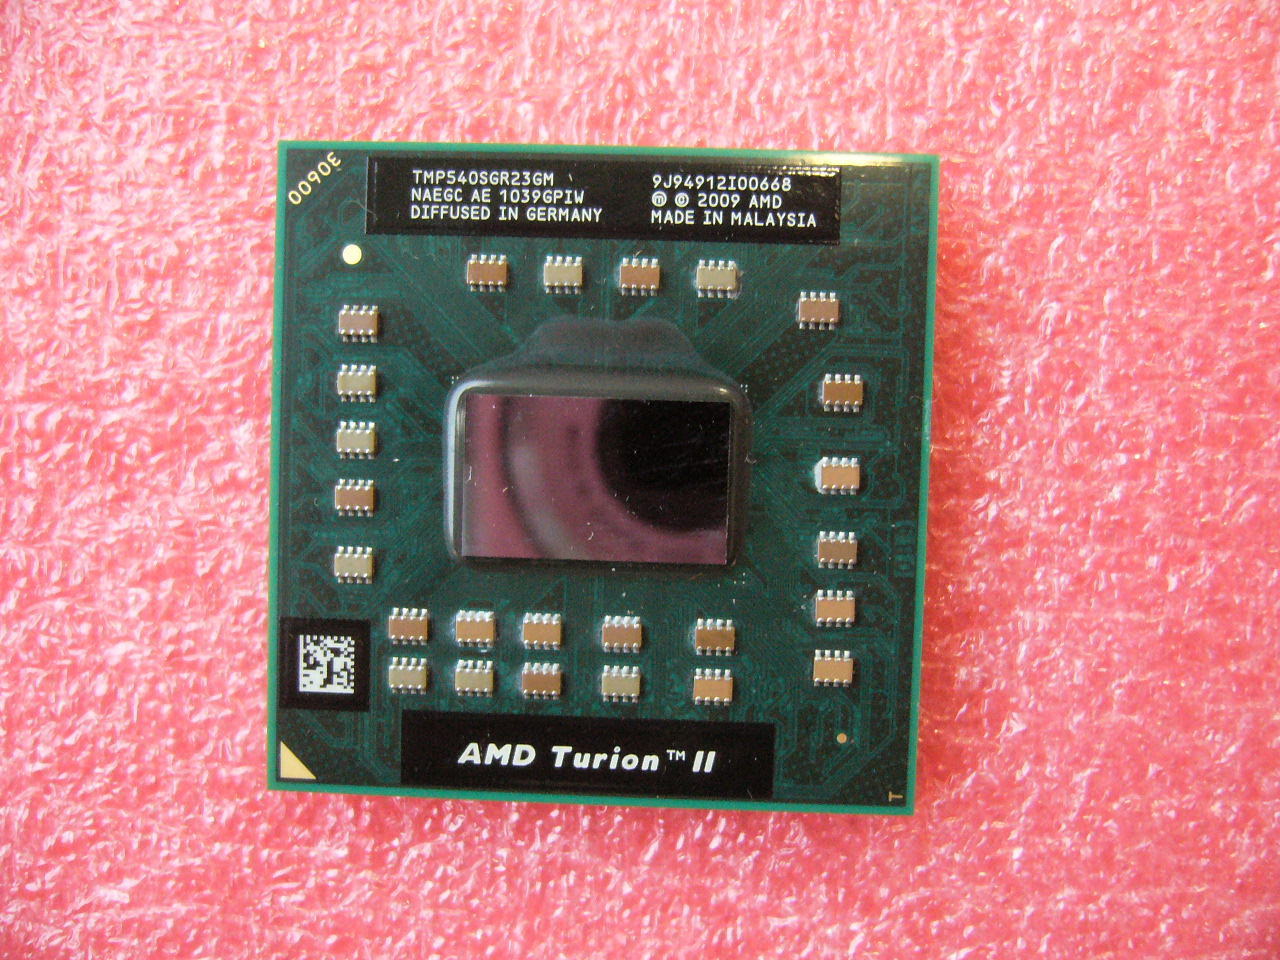 QTY 1x AMD Turion II P540 2.4GHz Dual-Core (TMP540SGR23GM) Laptop CPU Socket S1